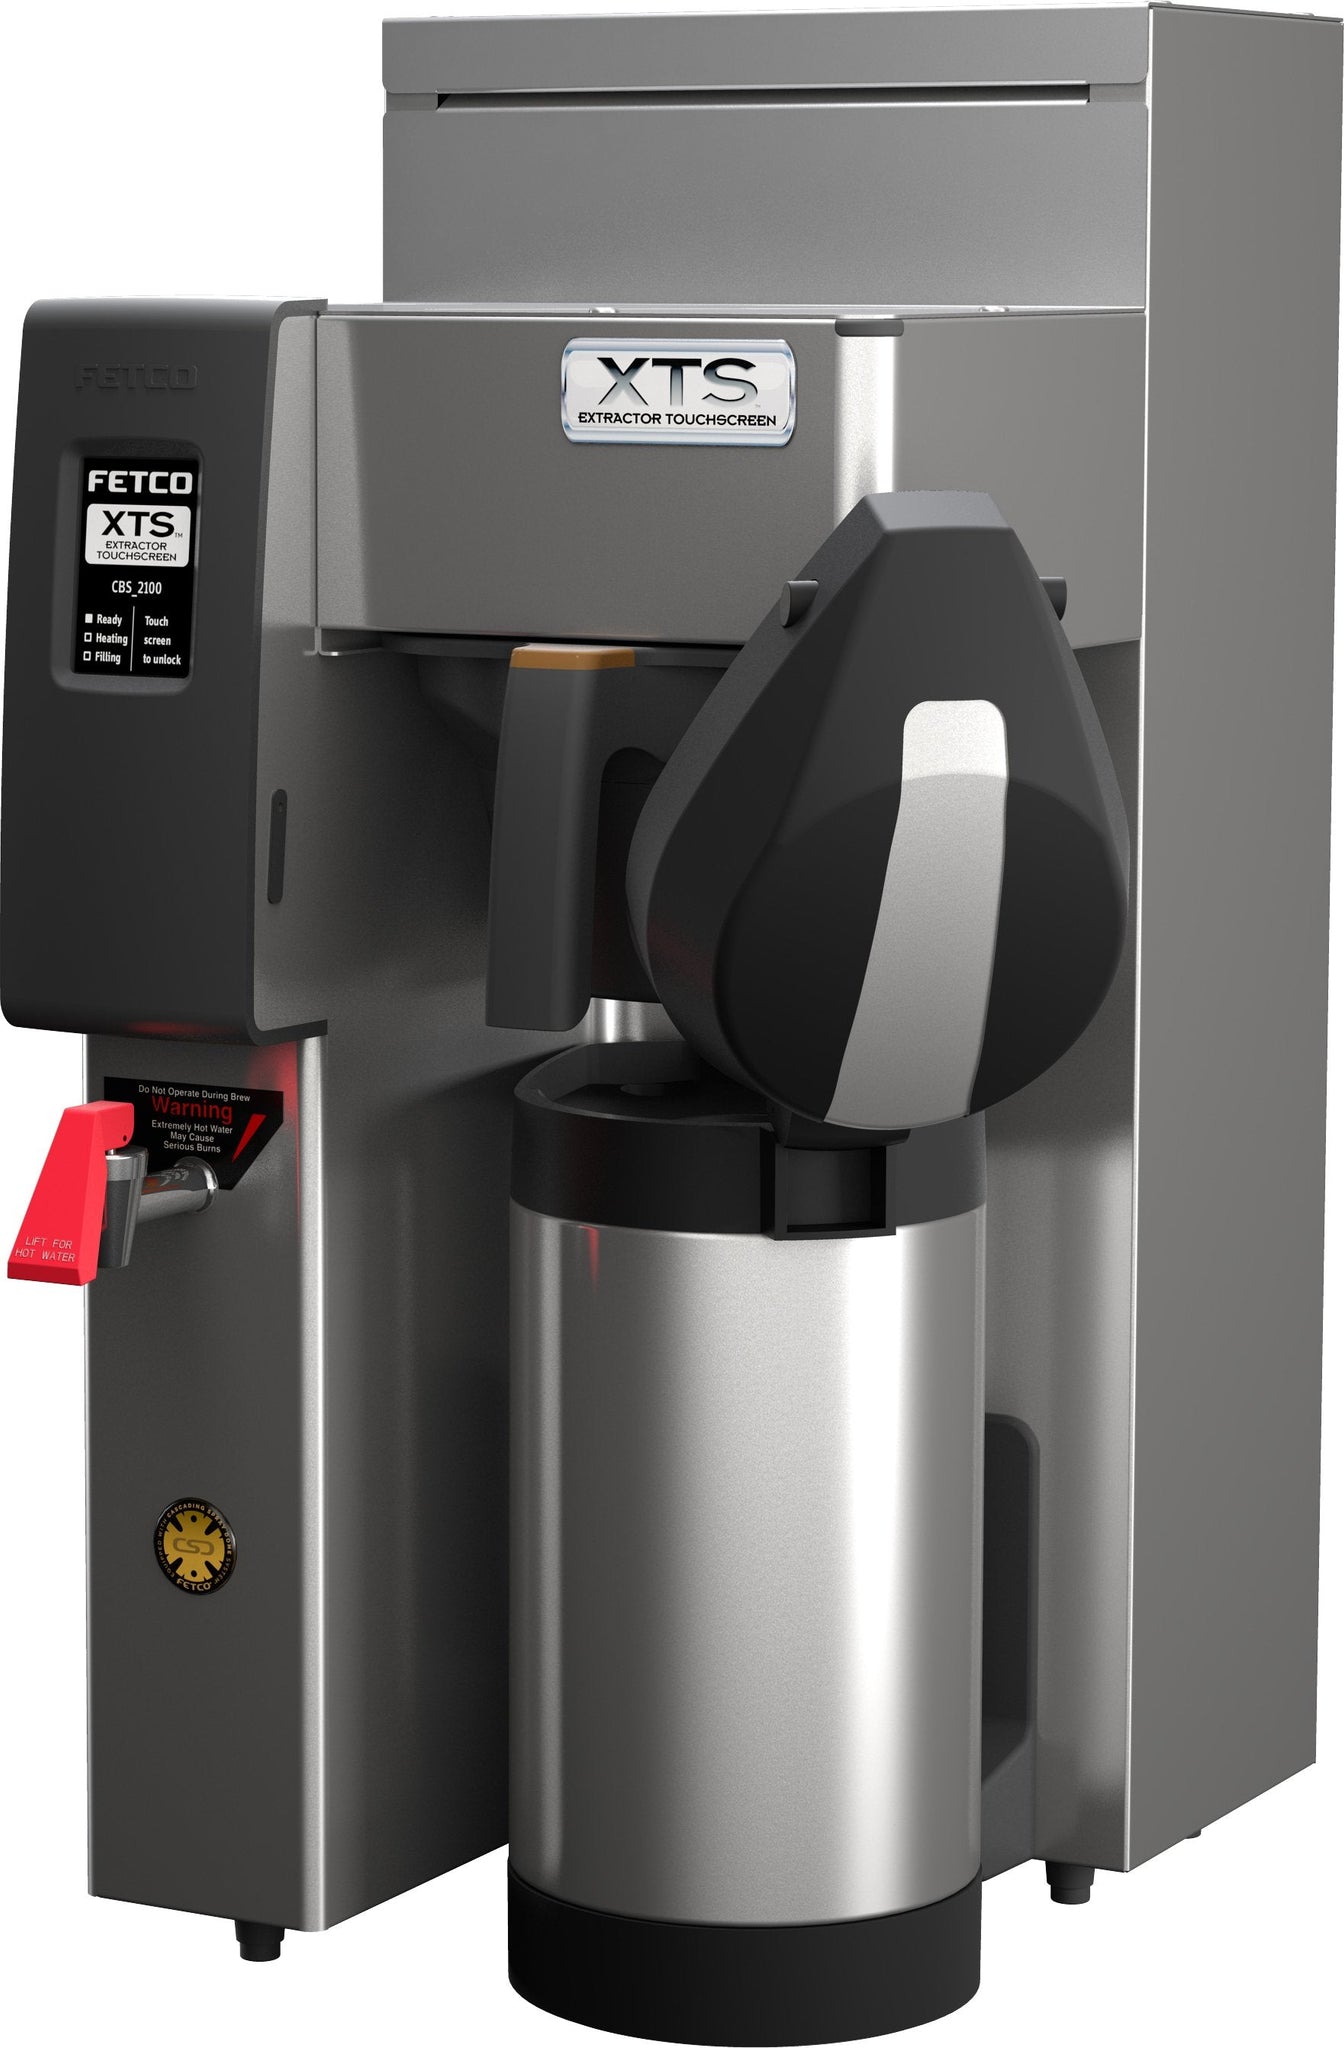 Fetco - Touchscreen Series Airpot Coffee Brewer Single Station 1 x 3 kW - CBS-2131XTS